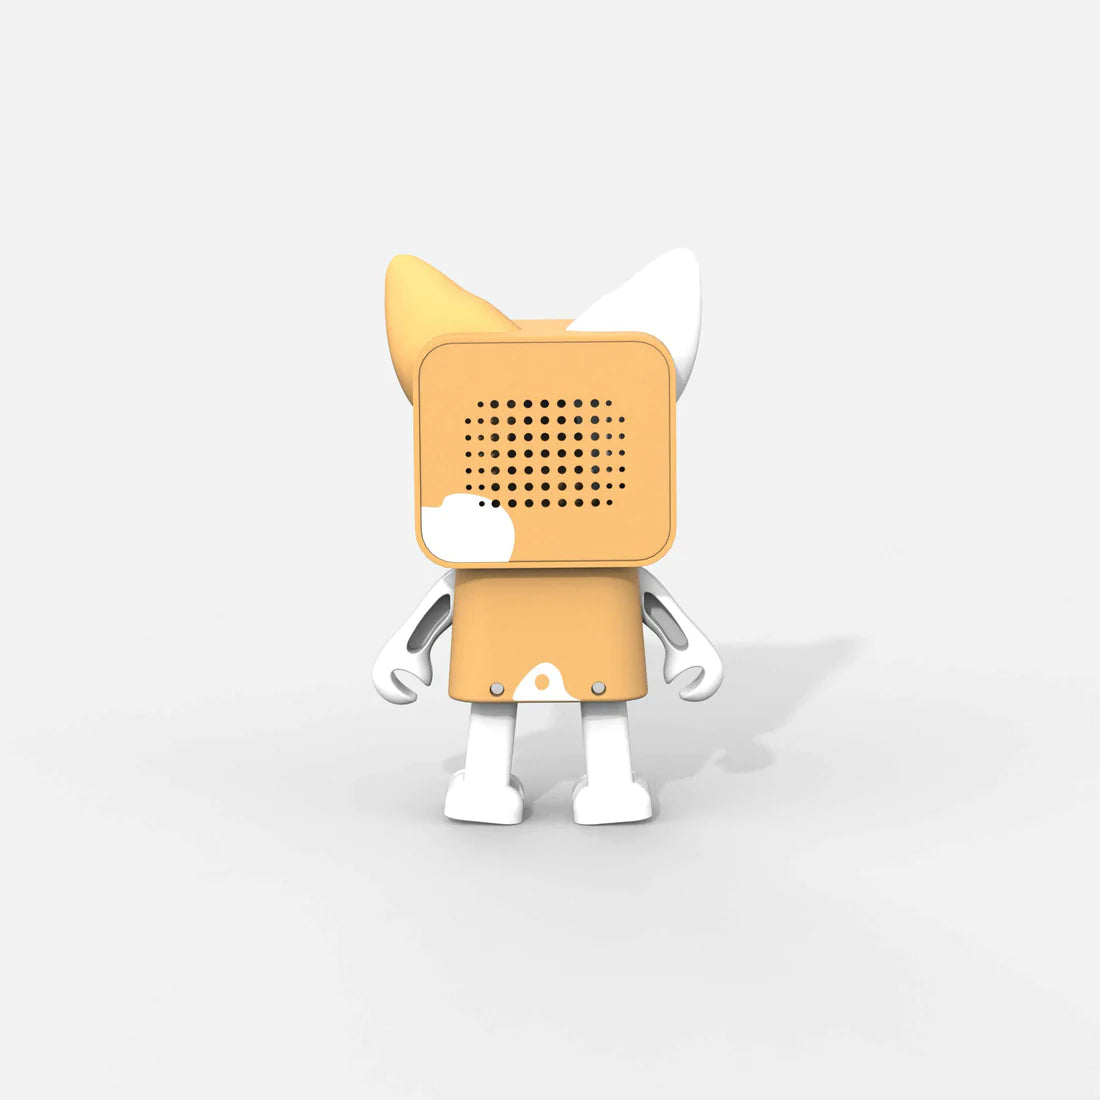 MOB Dancing Animals Bulldog - Bluetooth luidspreker